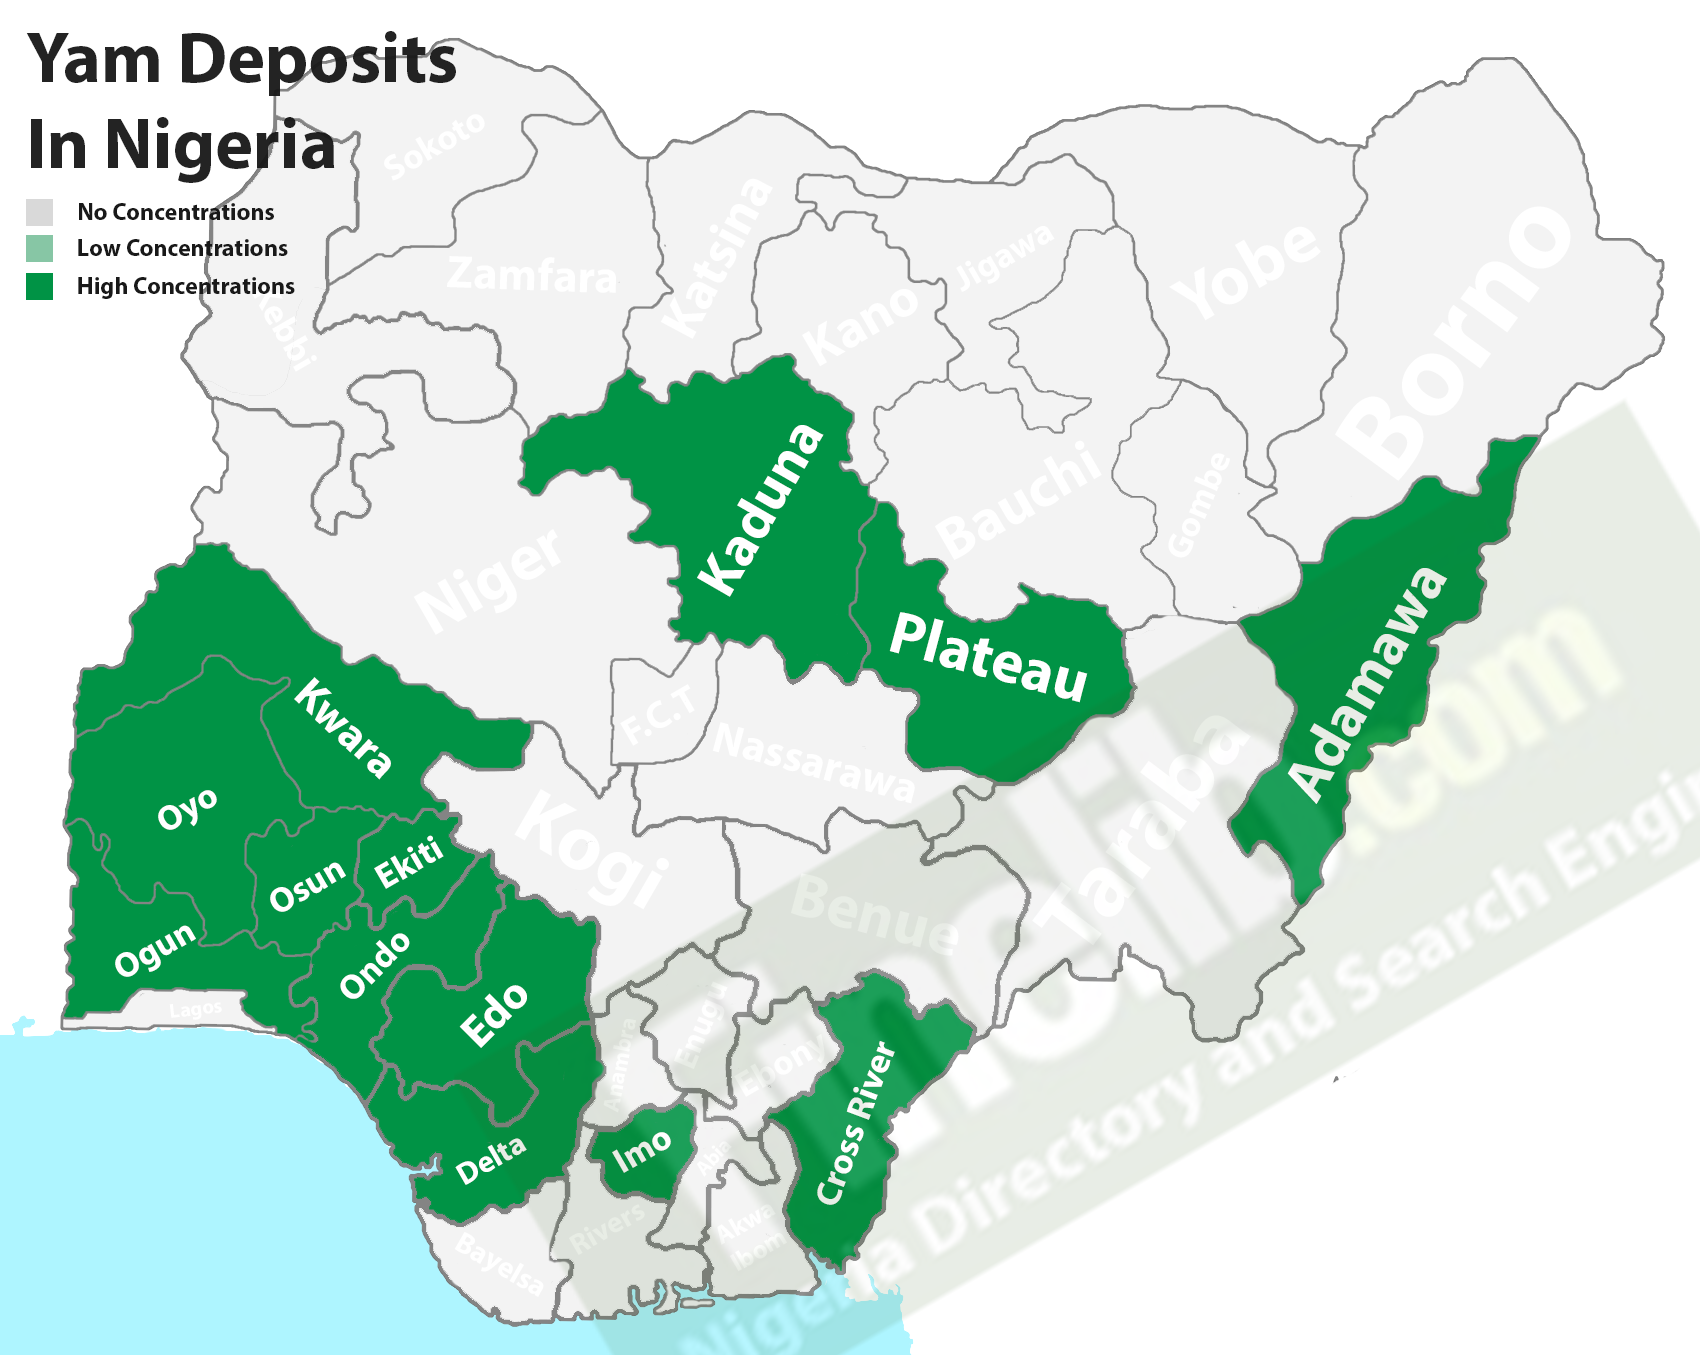 Yam producing states in Nigeria